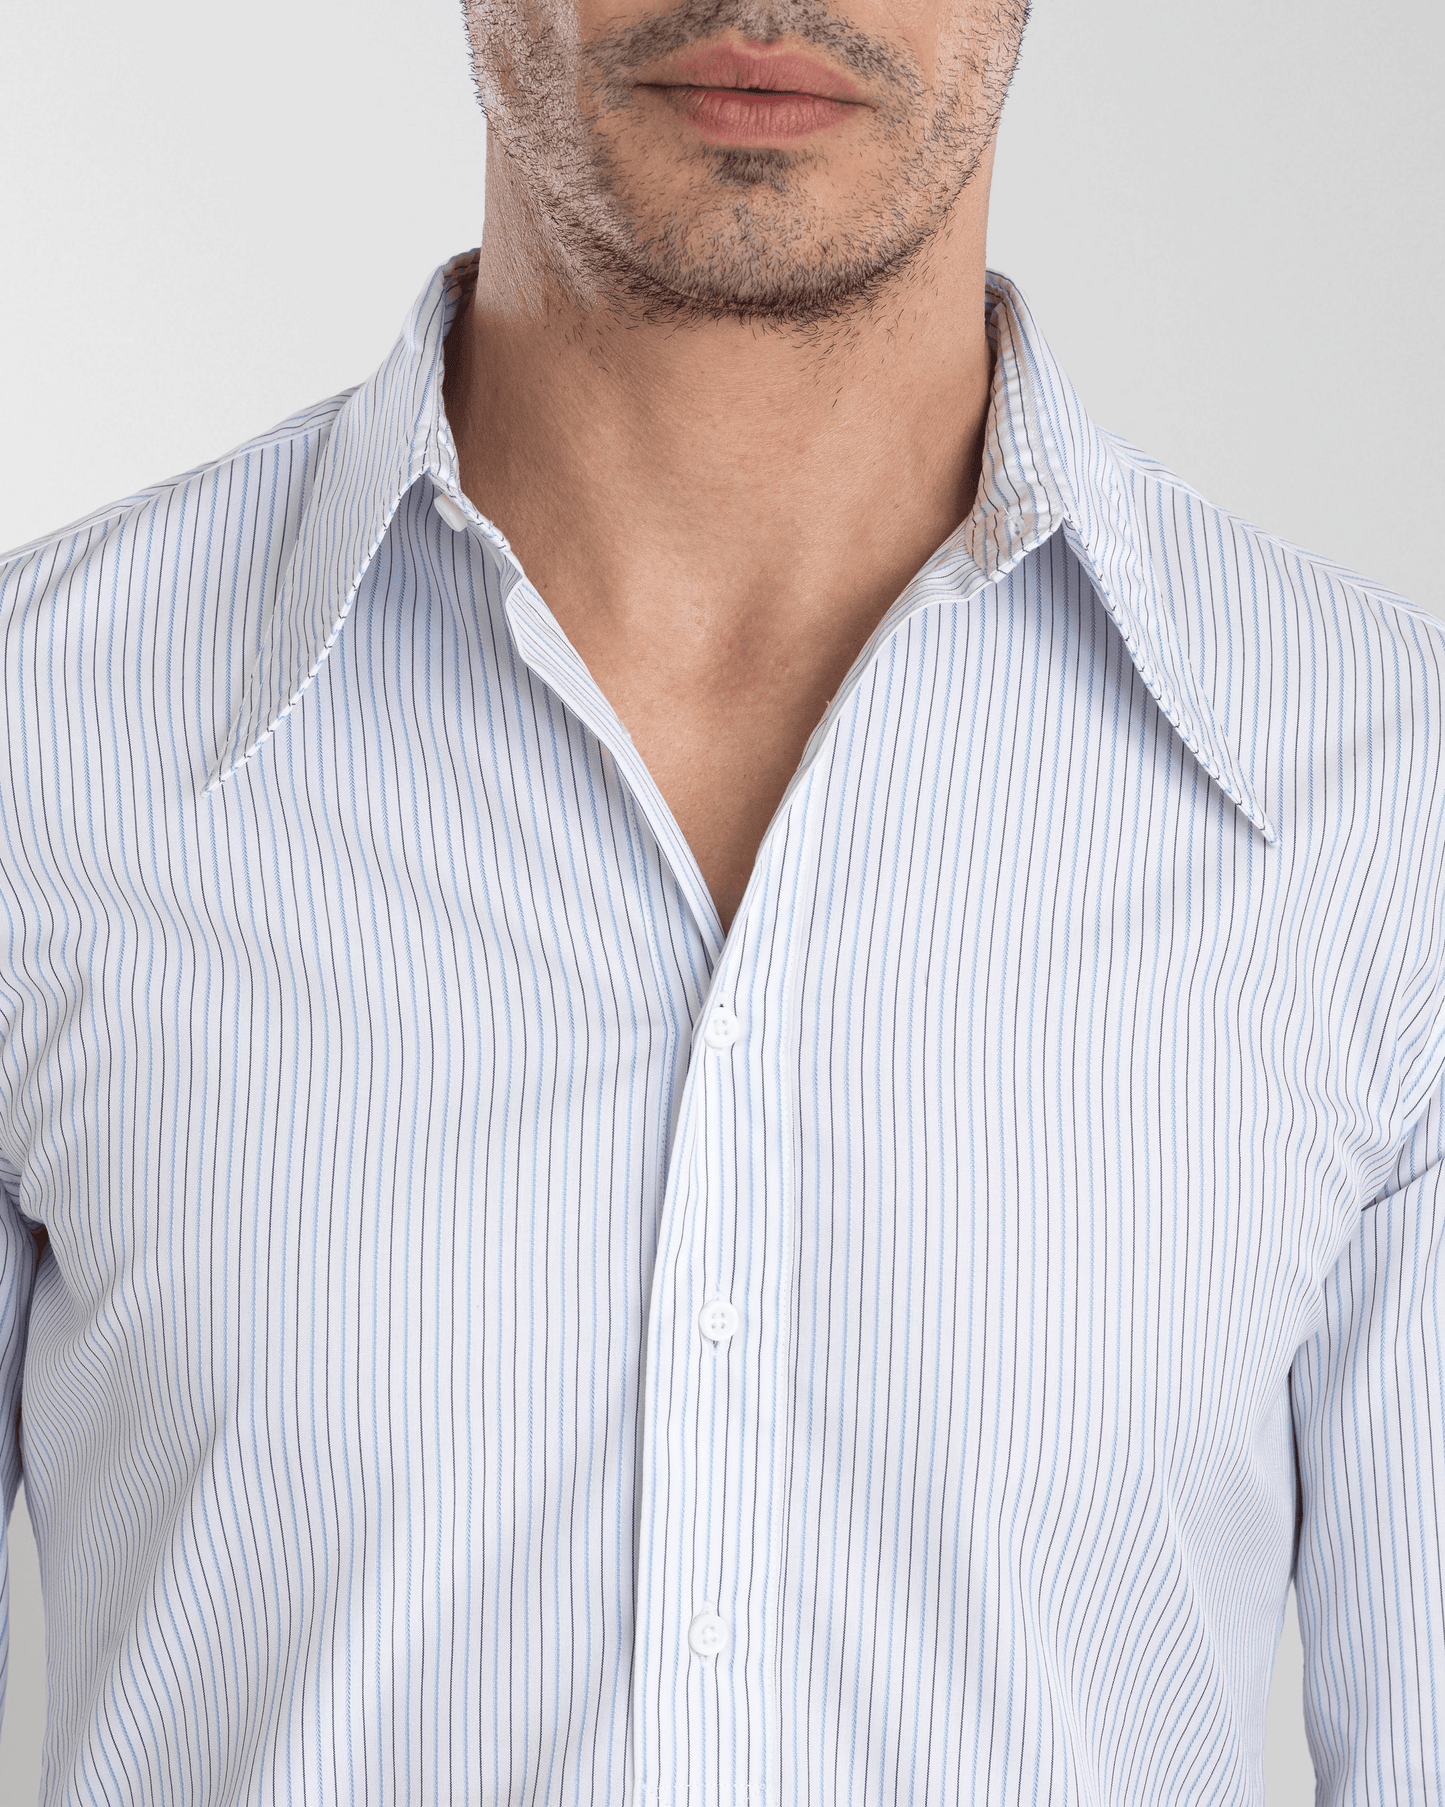 Blue and Black Pin Stripes On White Shirt